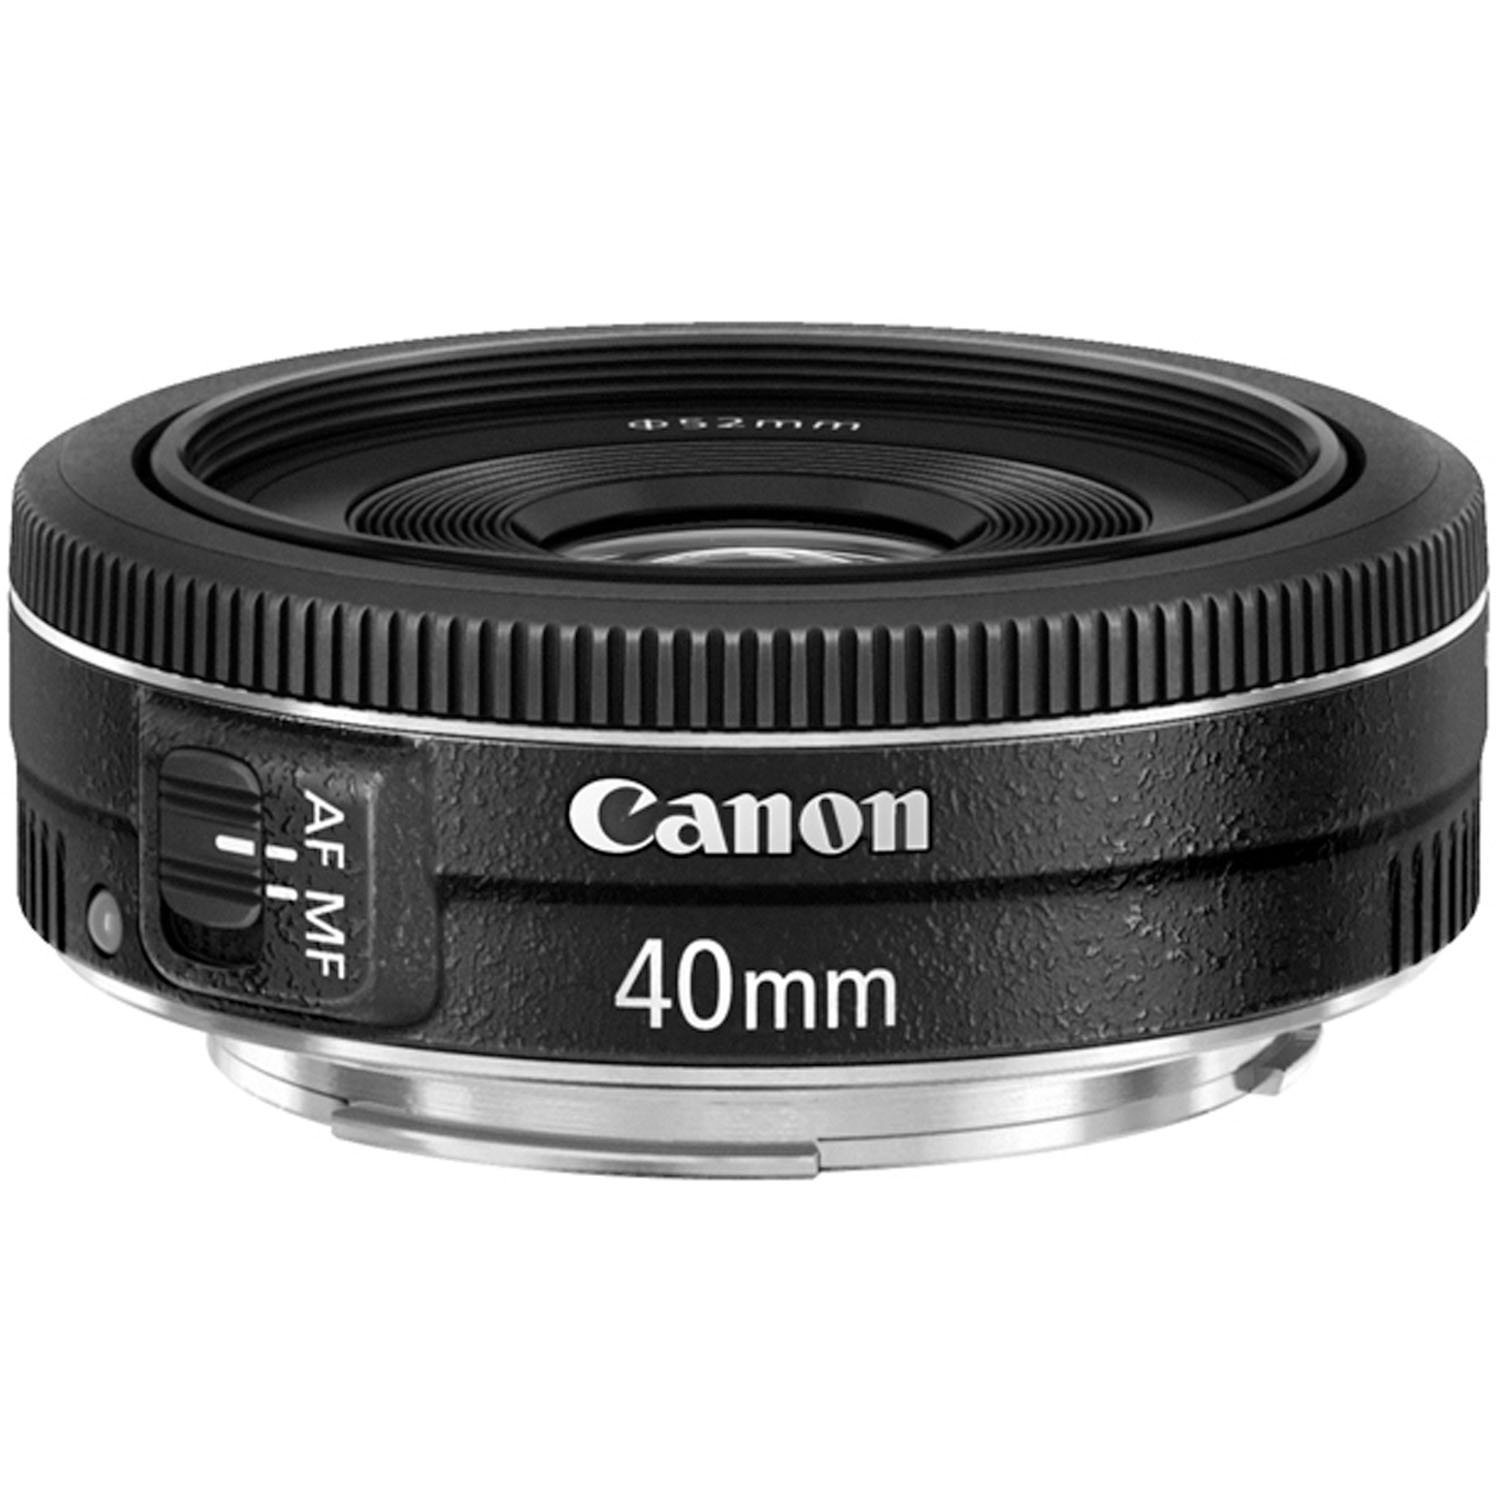 Canon EF 40mm pancake lens